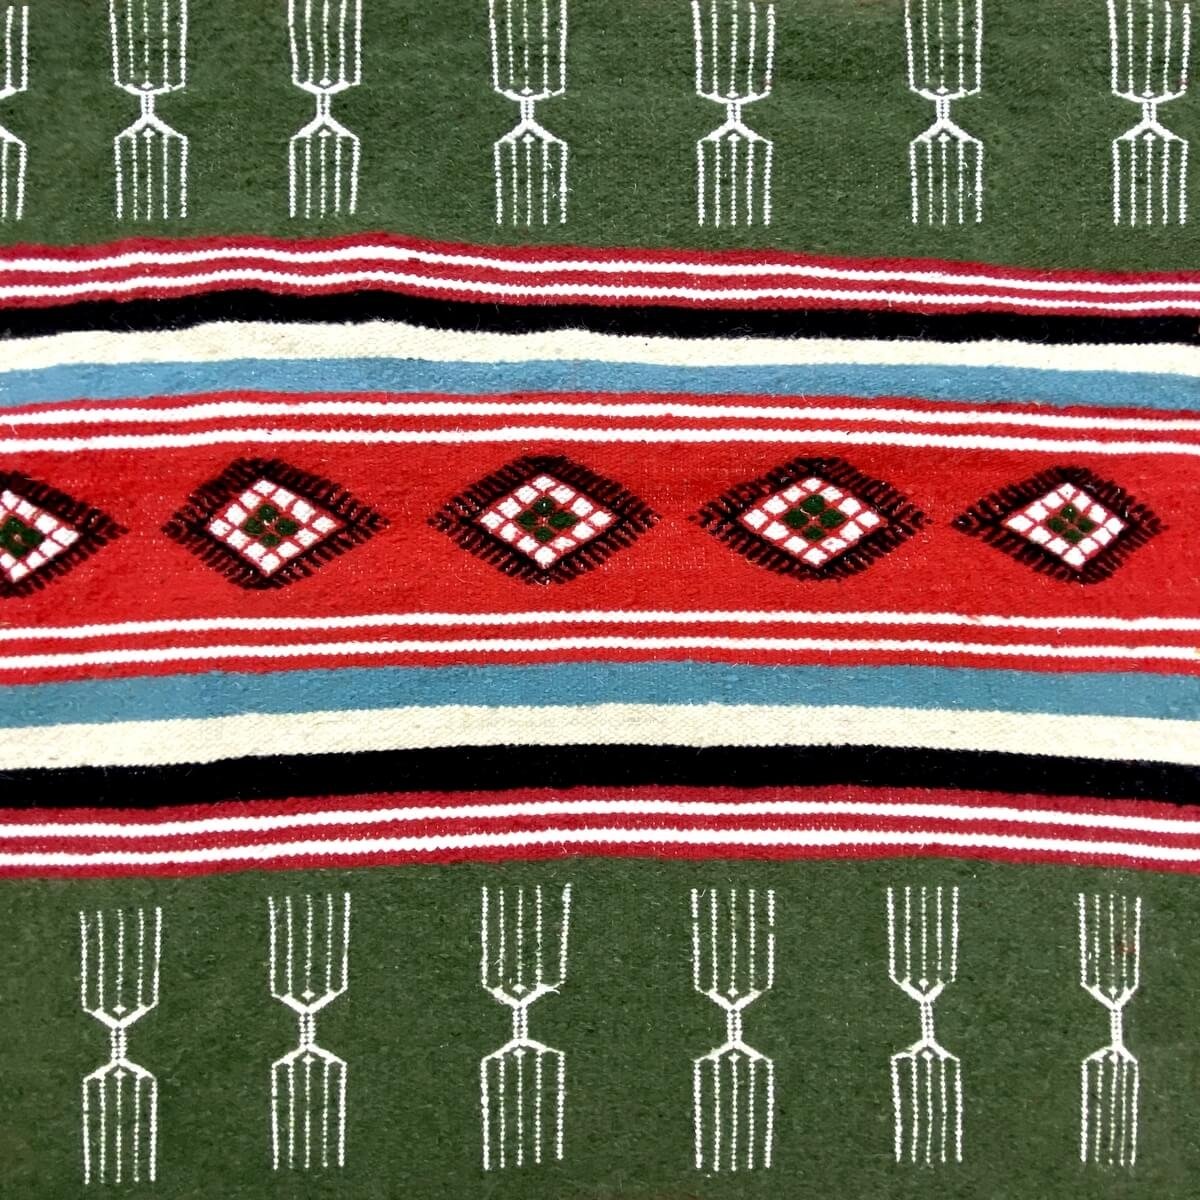 Berber tapijt Tapijt Kilim lang Siga 70x180 Veelkleurig (Handgeweven, Wol, Tunesië) Tunesisch kilimdeken, Marokkaanse stijl. Rec